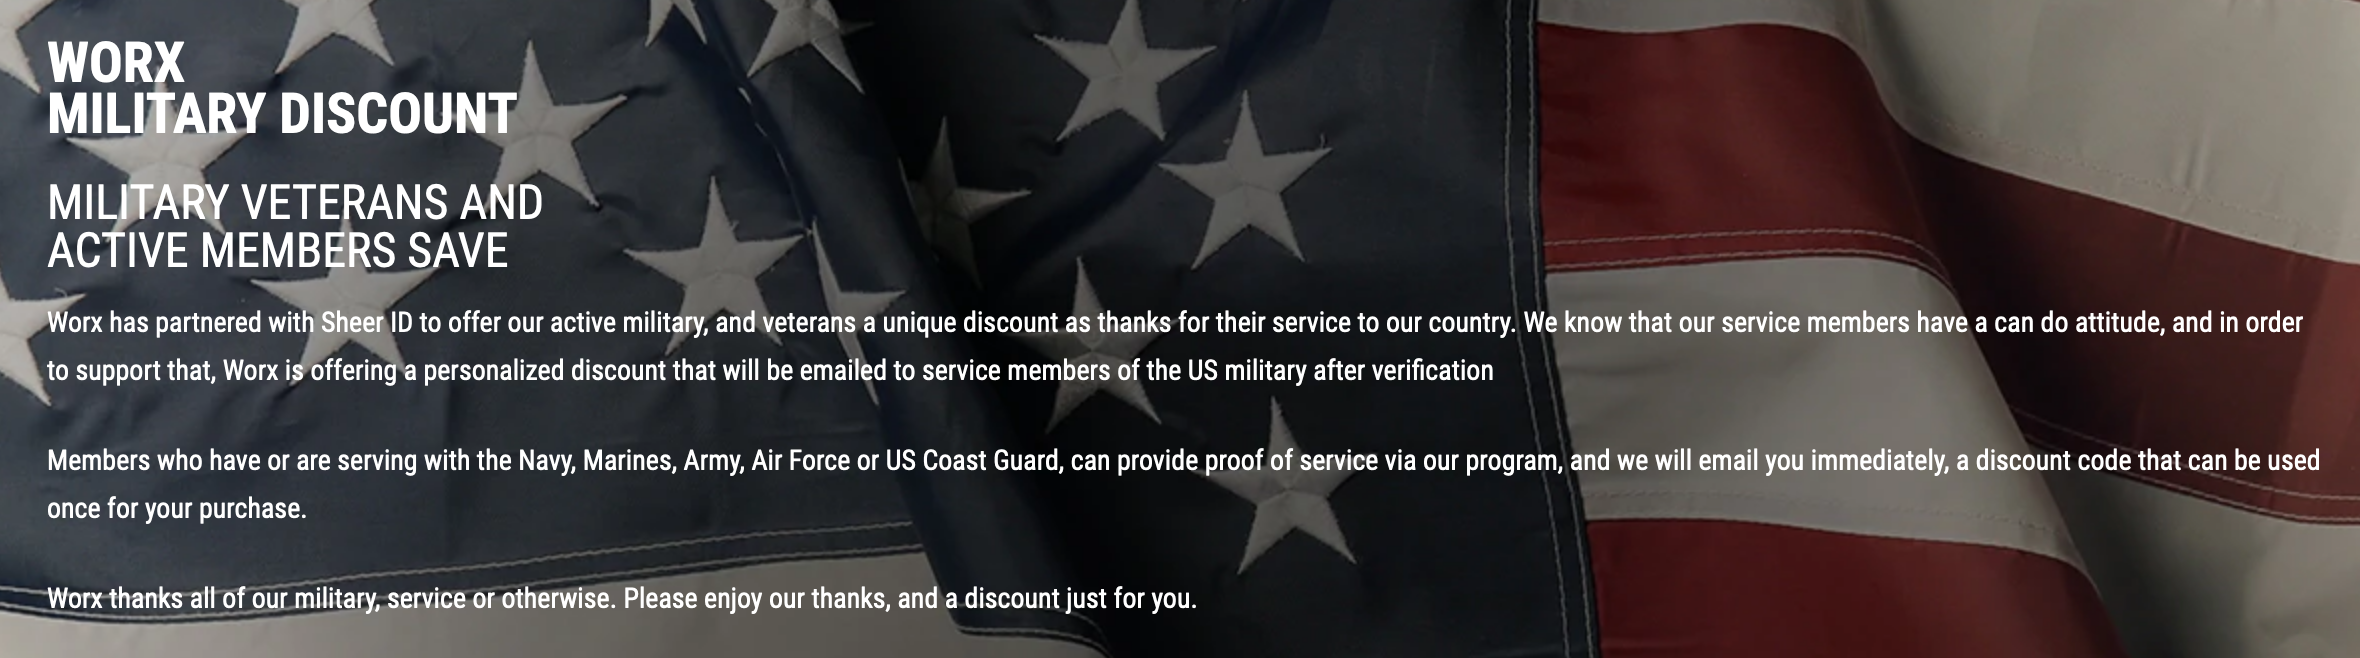 Worx Military Veteran Discounts